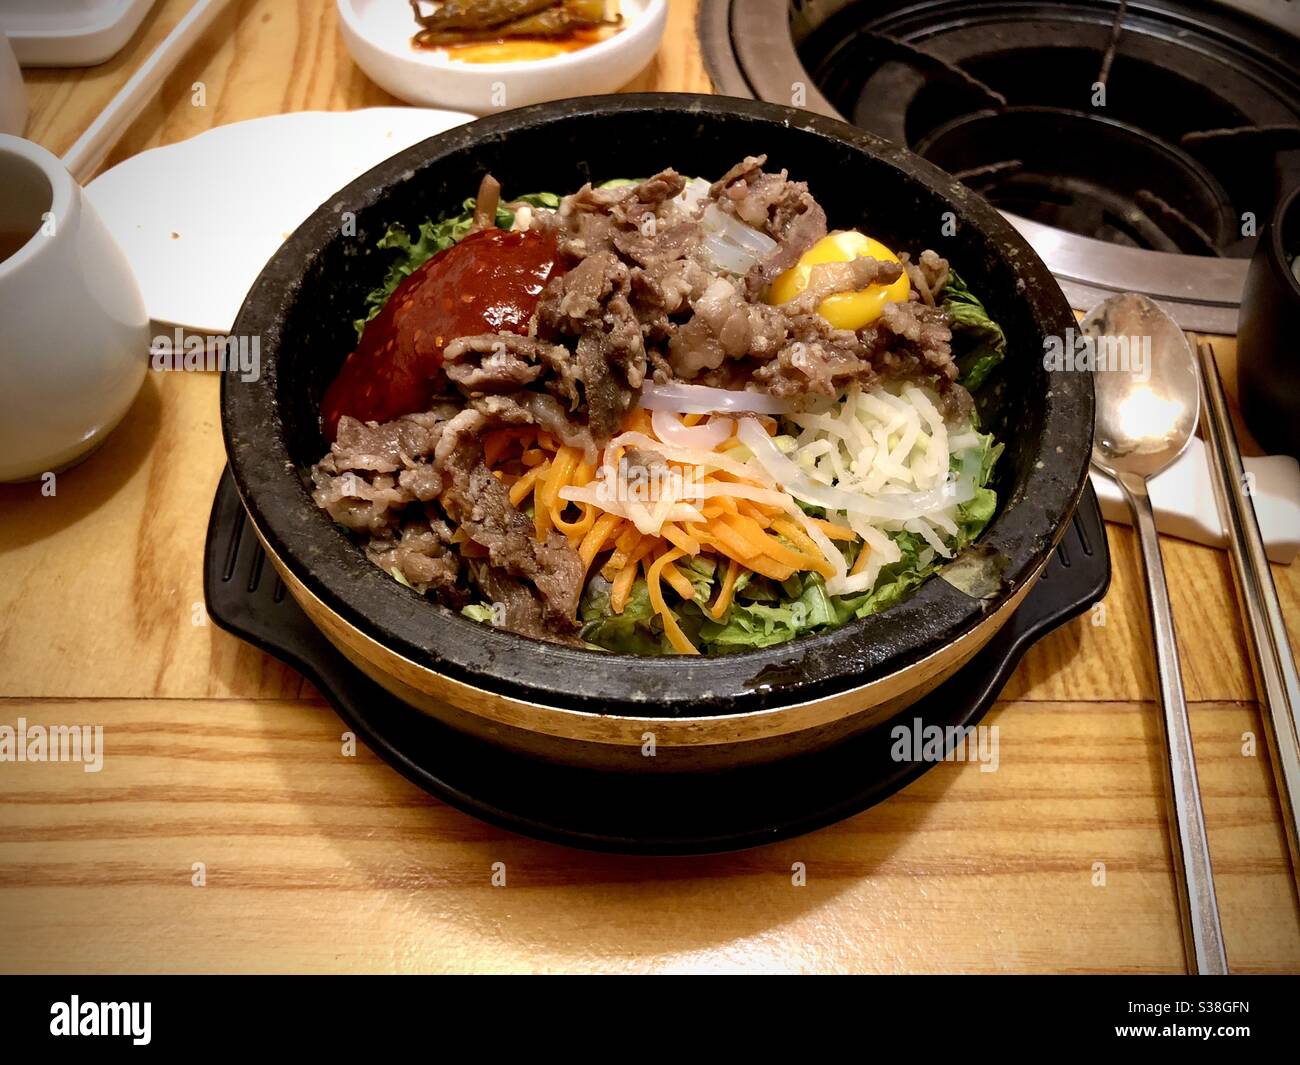 https://c8.alamy.com/comp/S38GFN/korean-food-dolsot-bibimbap-bibimbab-in-a-hot-stone-bowl-S38GFN.jpg